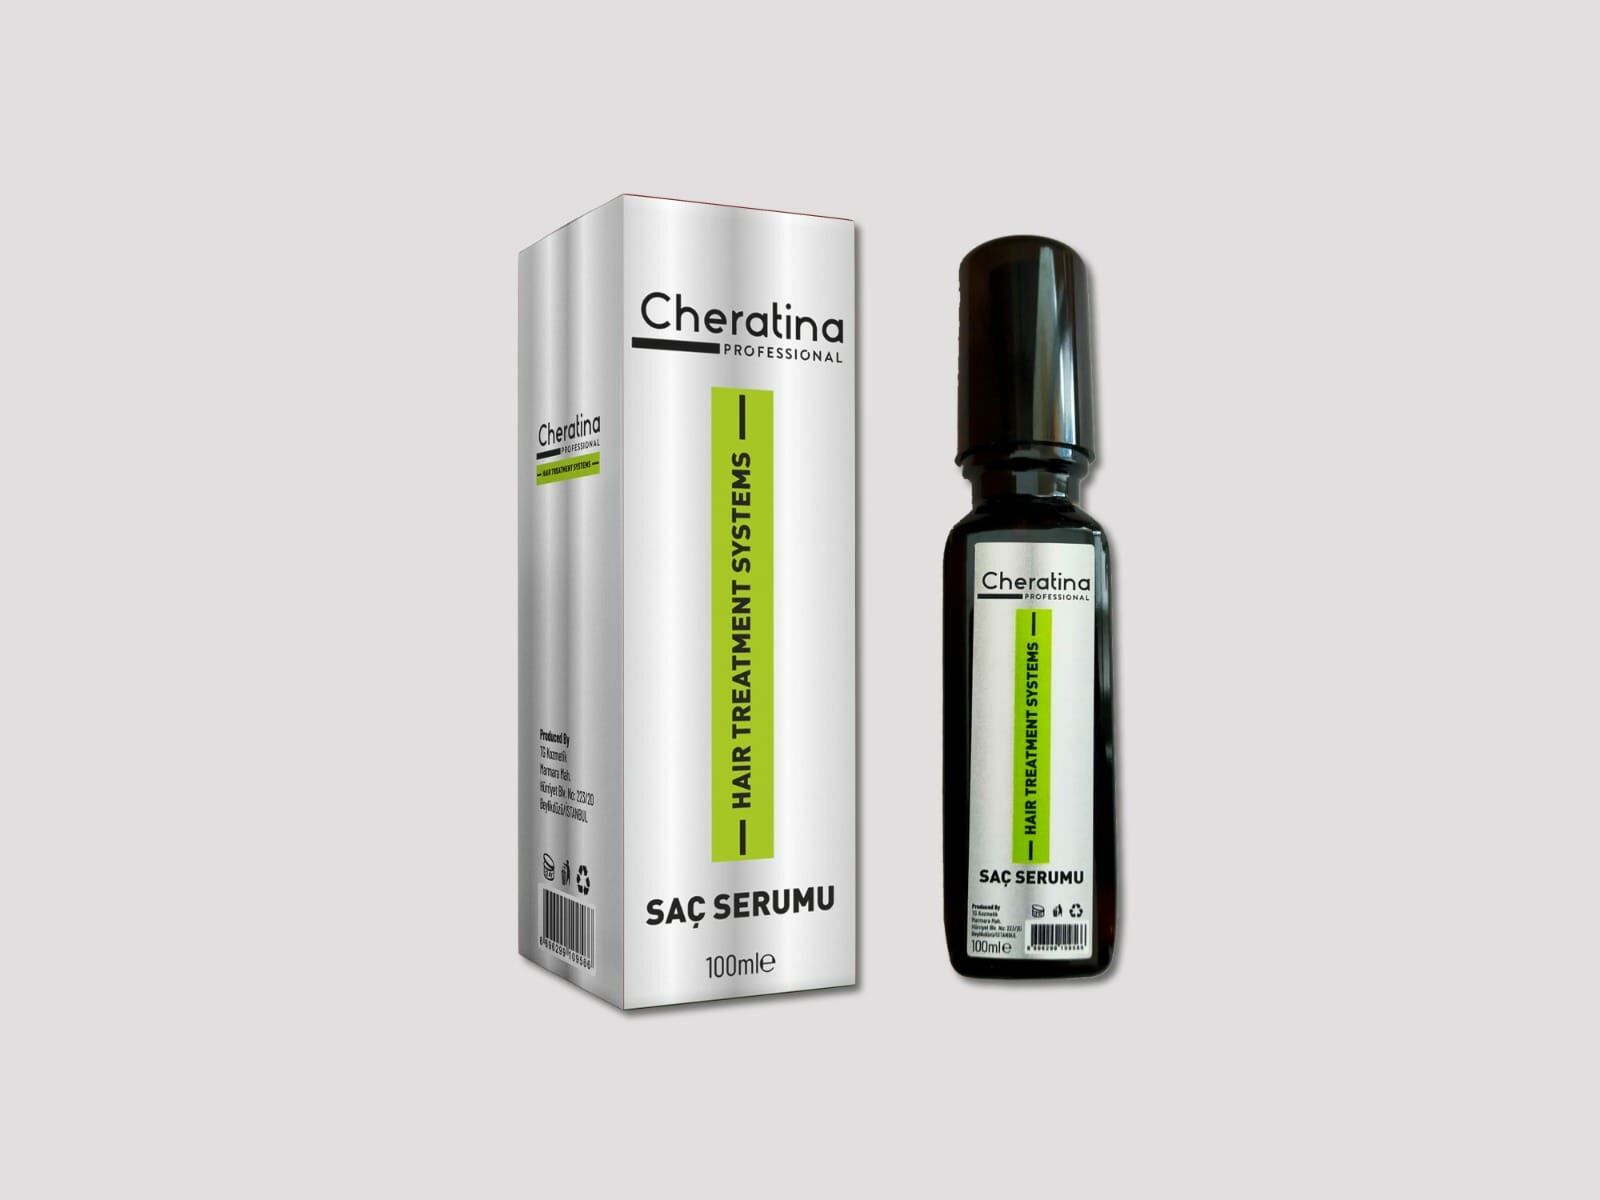 Cheratina Haır Treatment Systems Saç Serumu 100 ml.